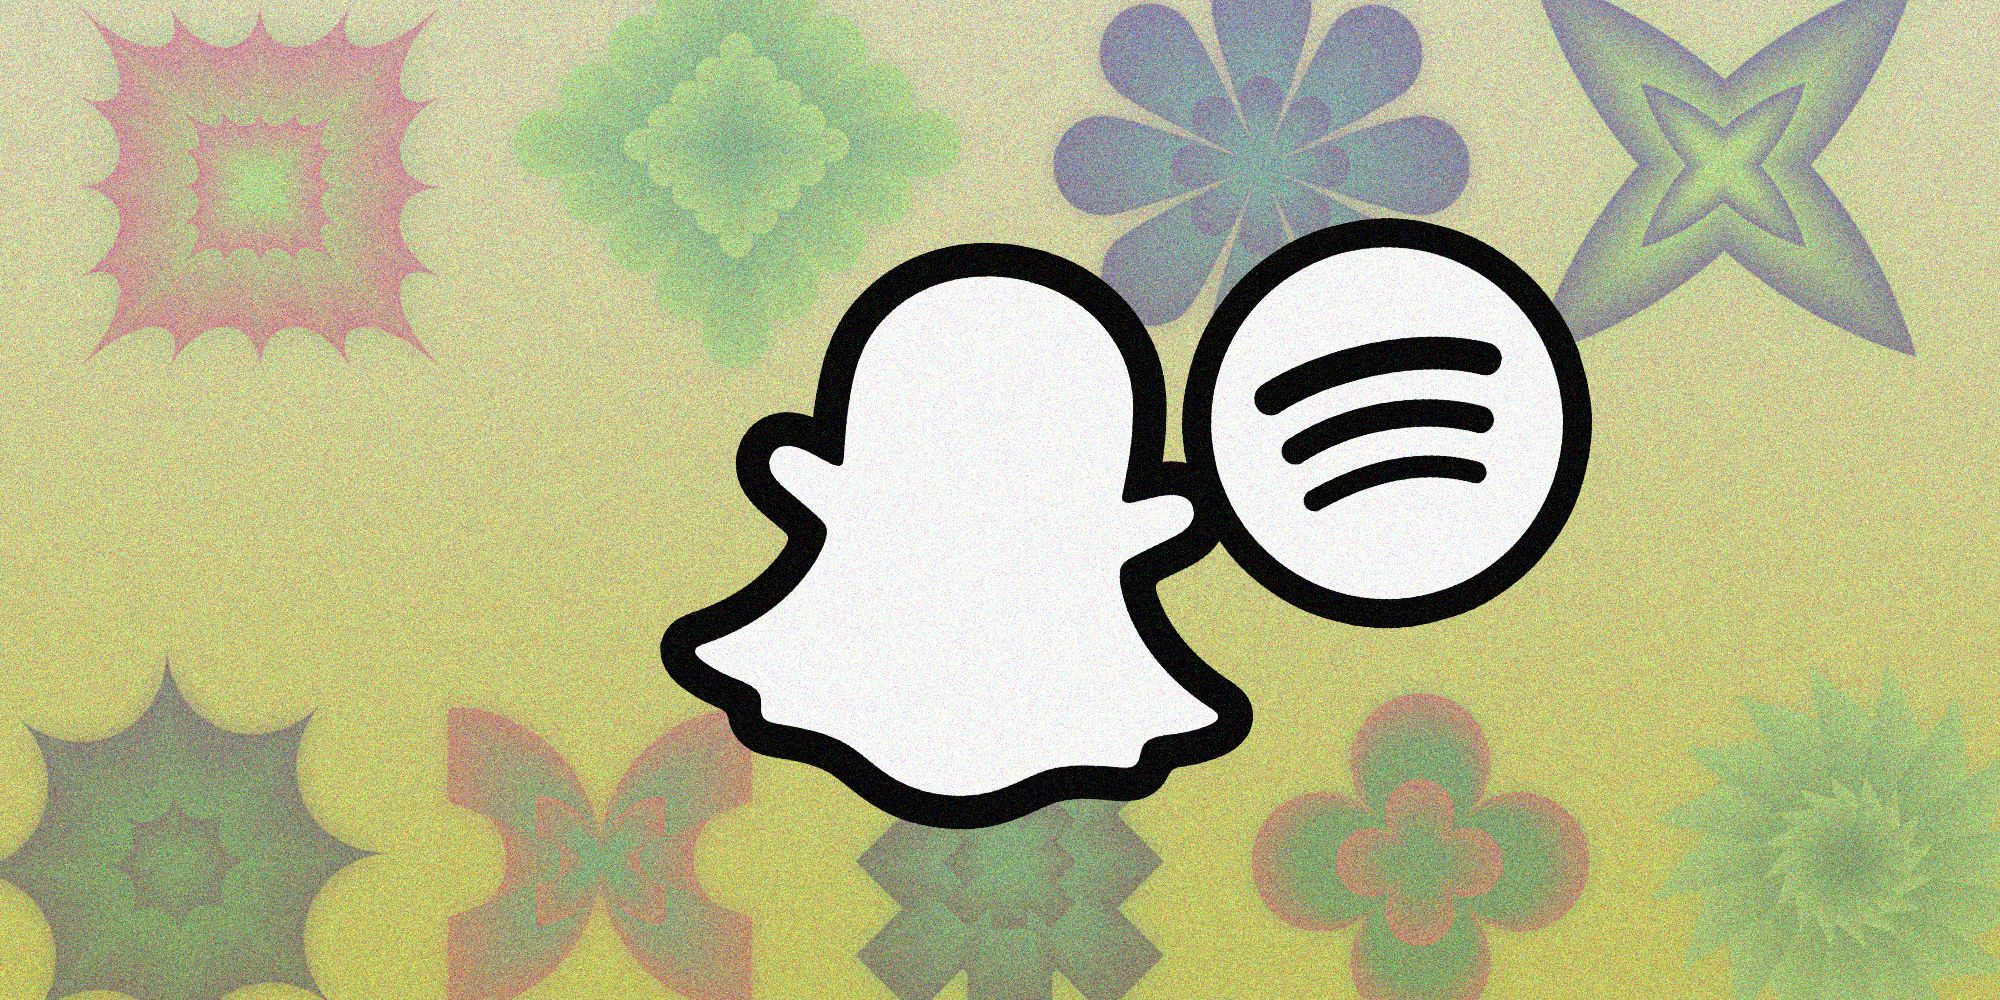 Snapchat Spotify logos against listening personalities